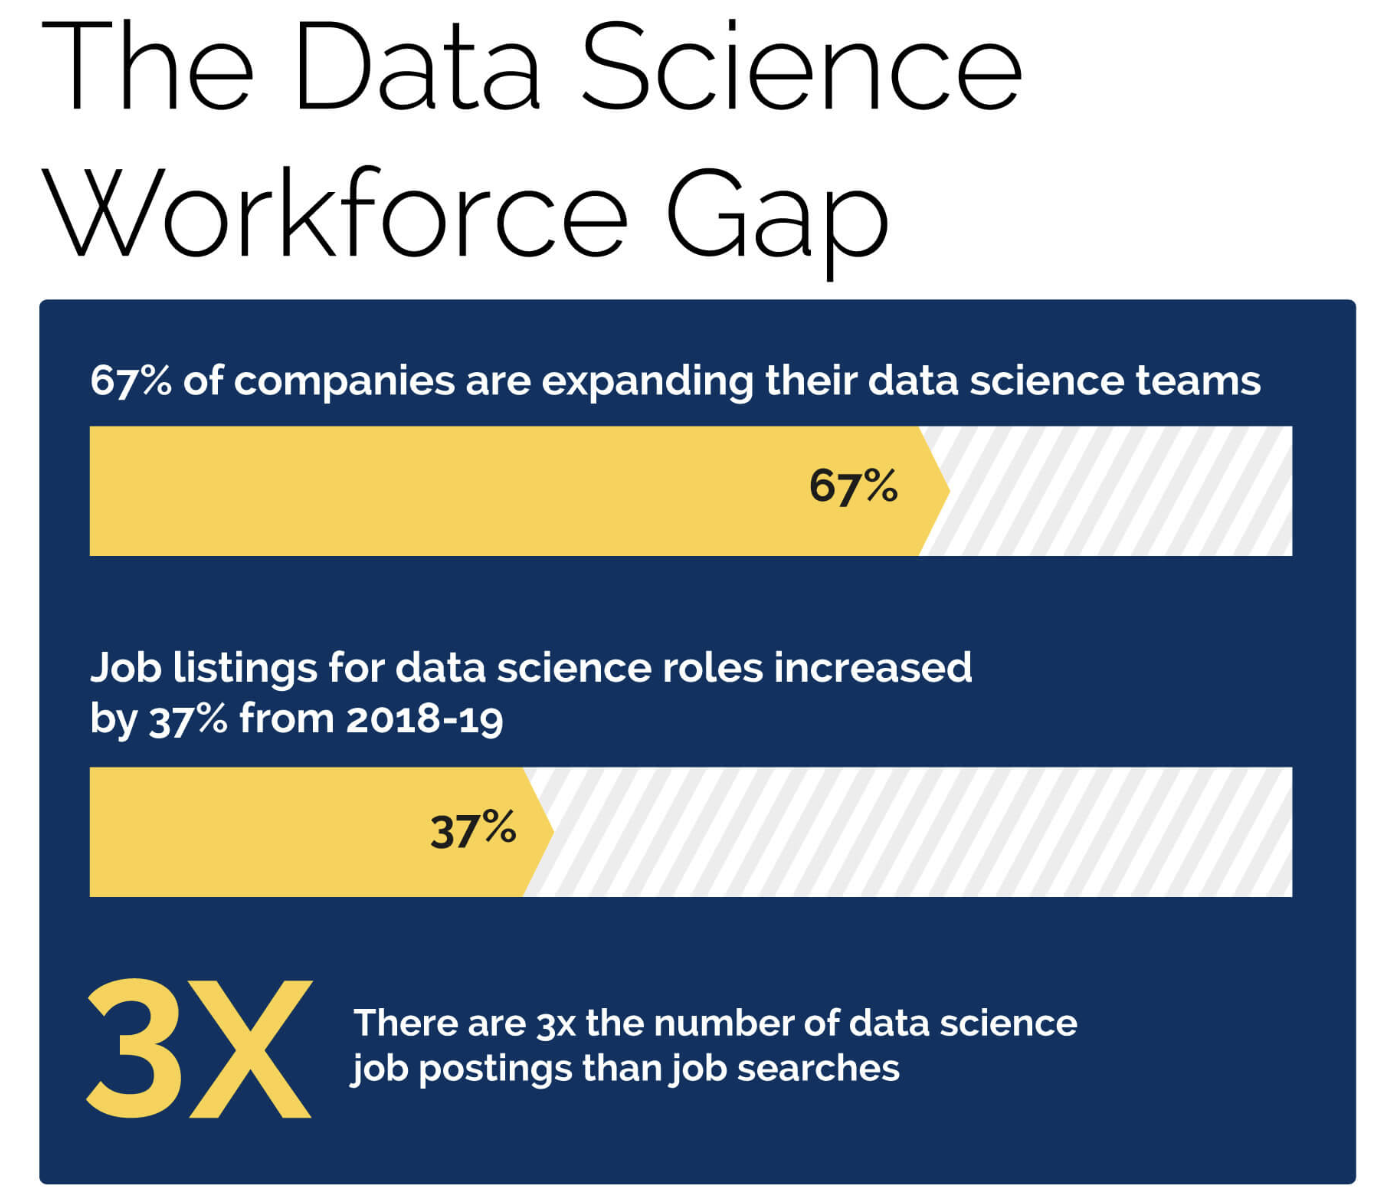 Data science workforce gap metrics chart